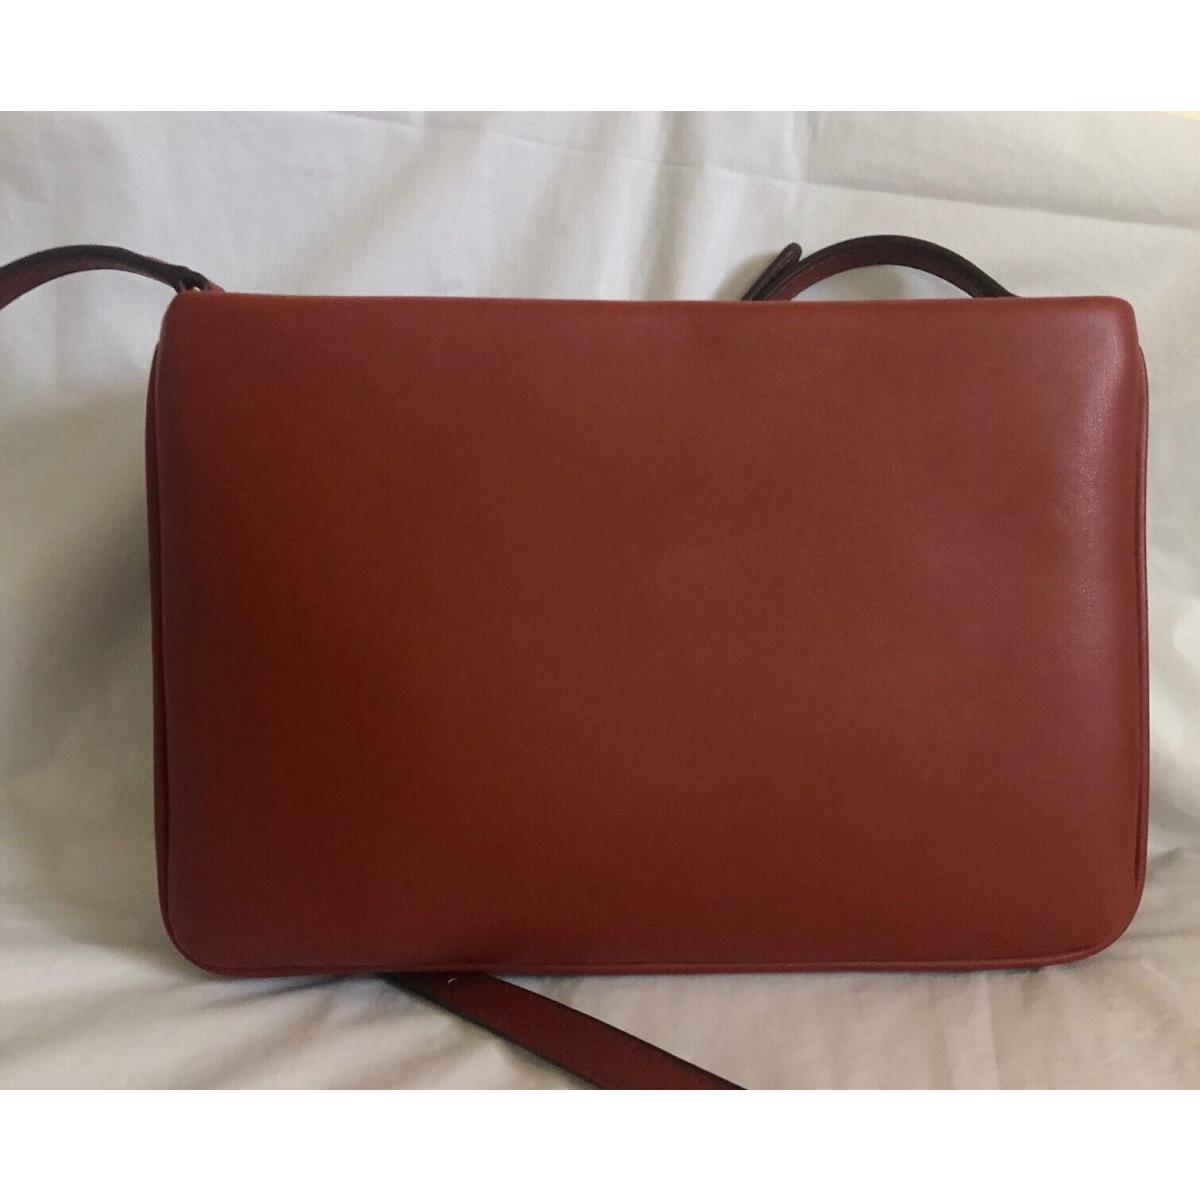 DKNY  bag   - Rust Brown / Multi Handle/Strap, Brown Exterior, Beige Lining 2